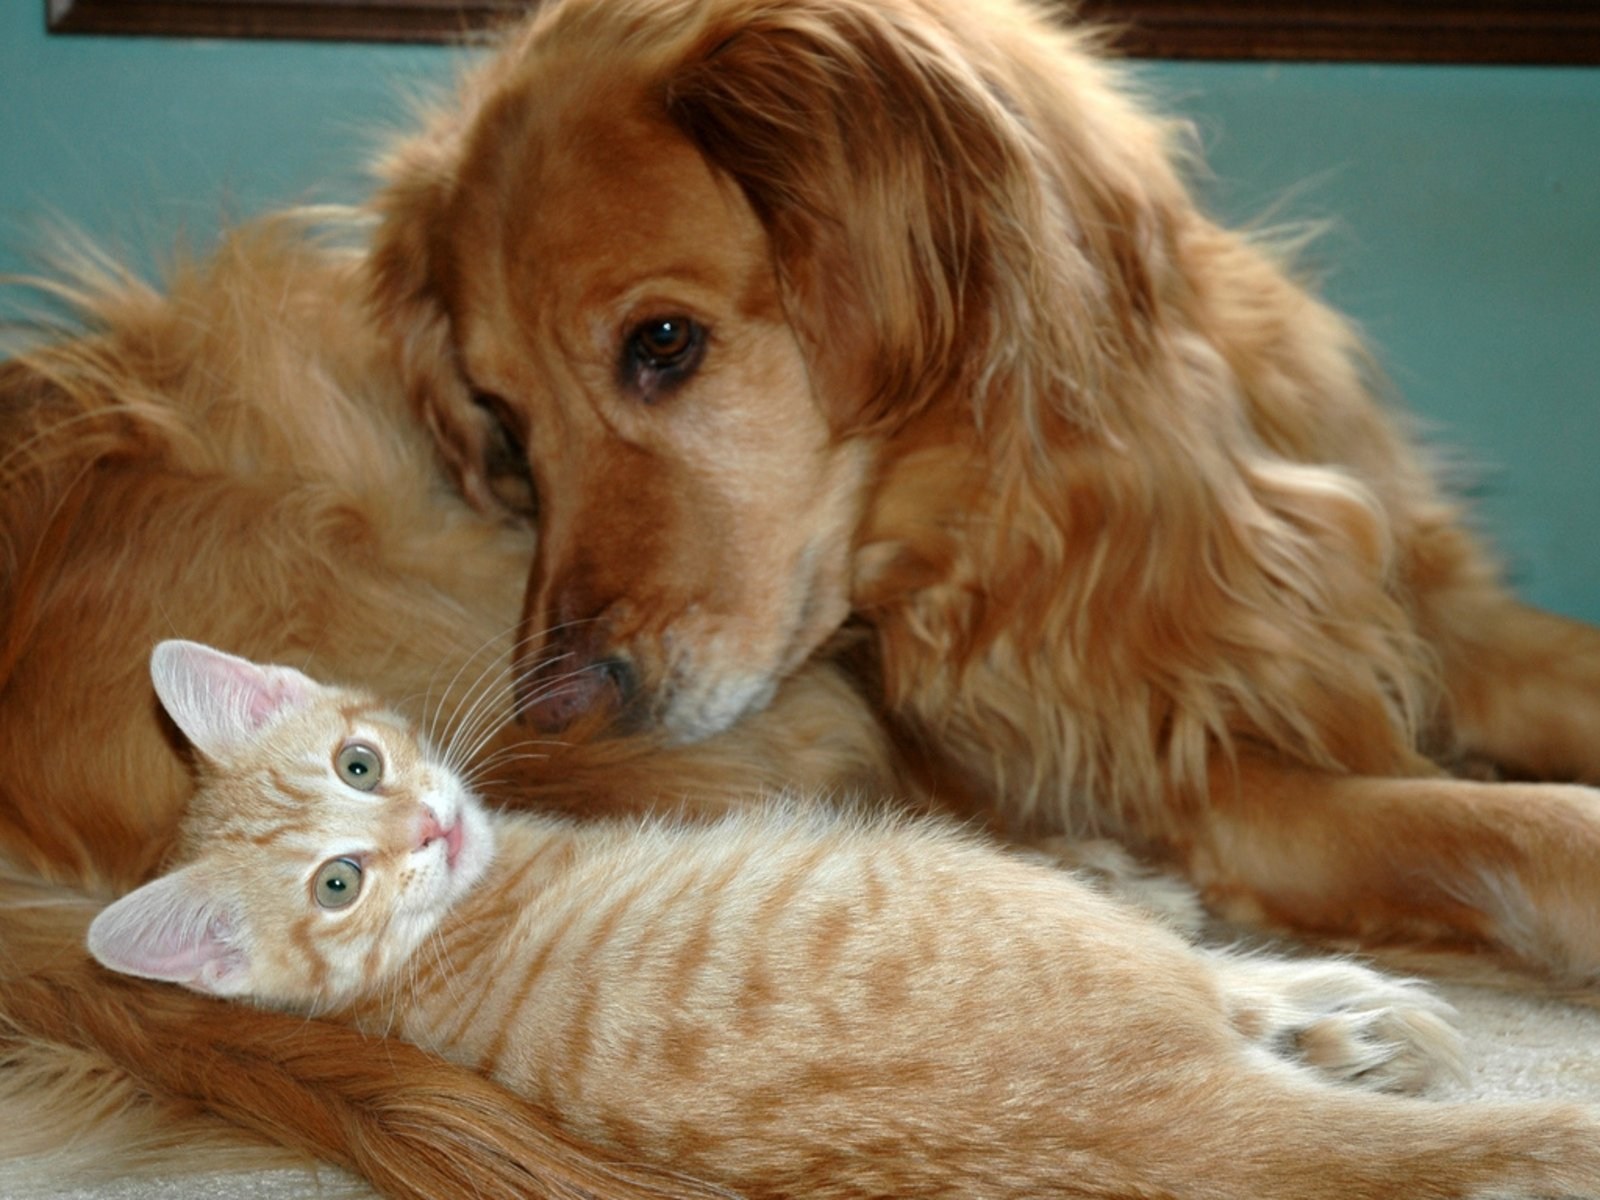 Показать кошки собачки. Кошки и собаки. Картинки кошек и собак. Rjireb b CJ,FRB. Собака и кошка вместе.